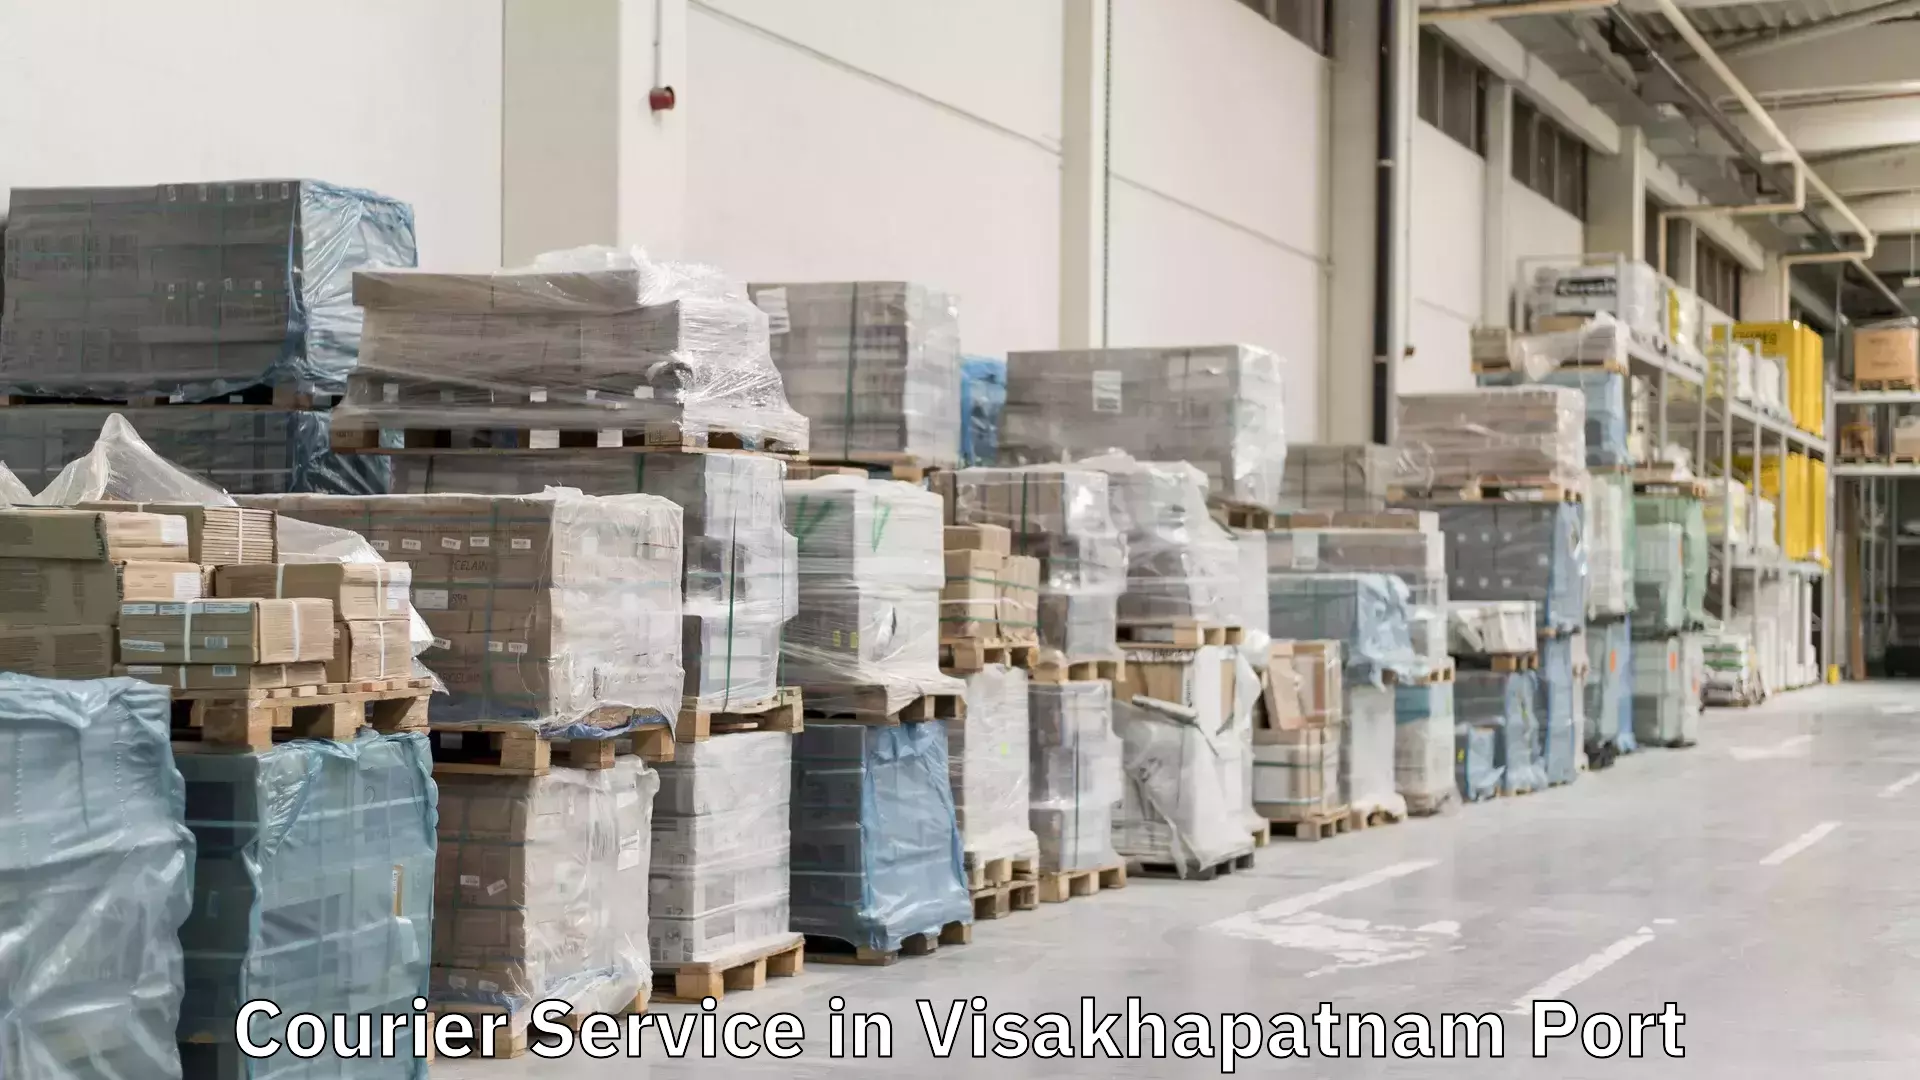 Efficient cargo services in Visakhapatnam Port